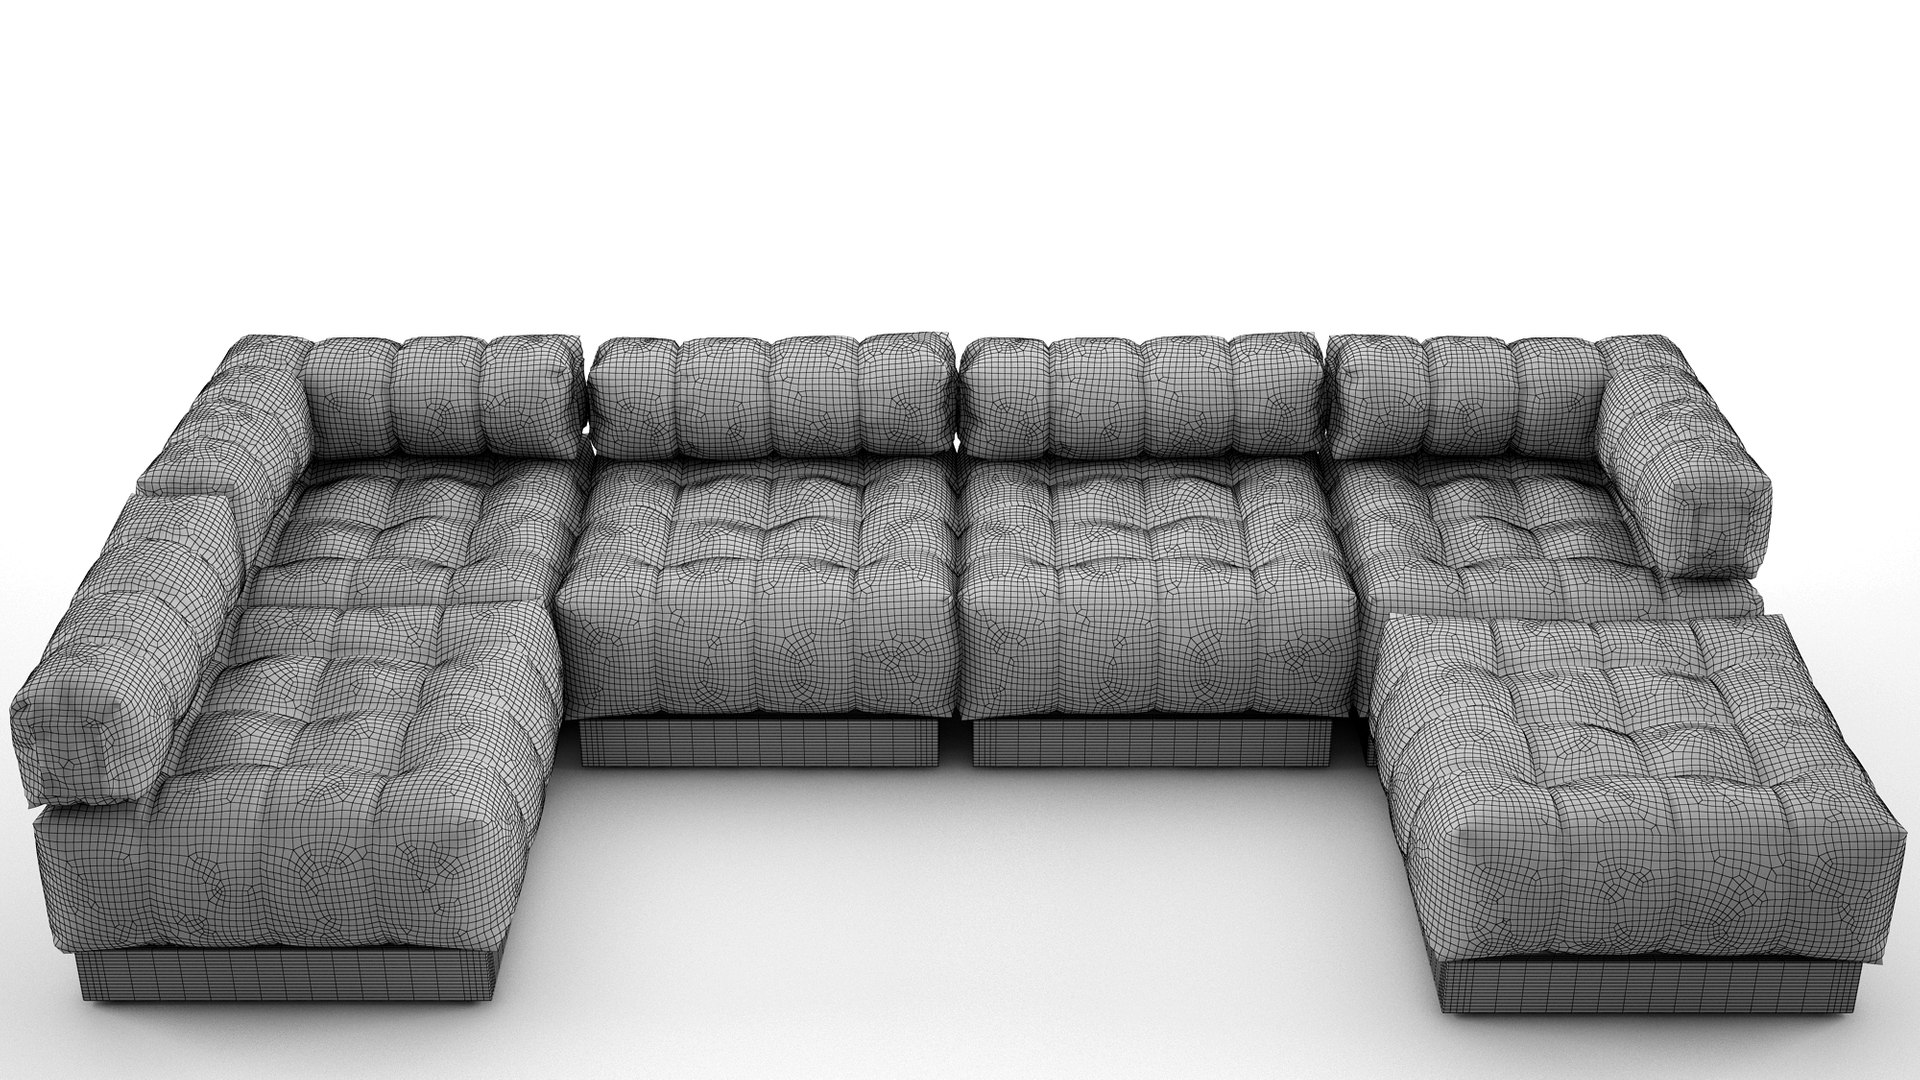 3D HProbb Modular Sofa model - TurboSquid 1881837